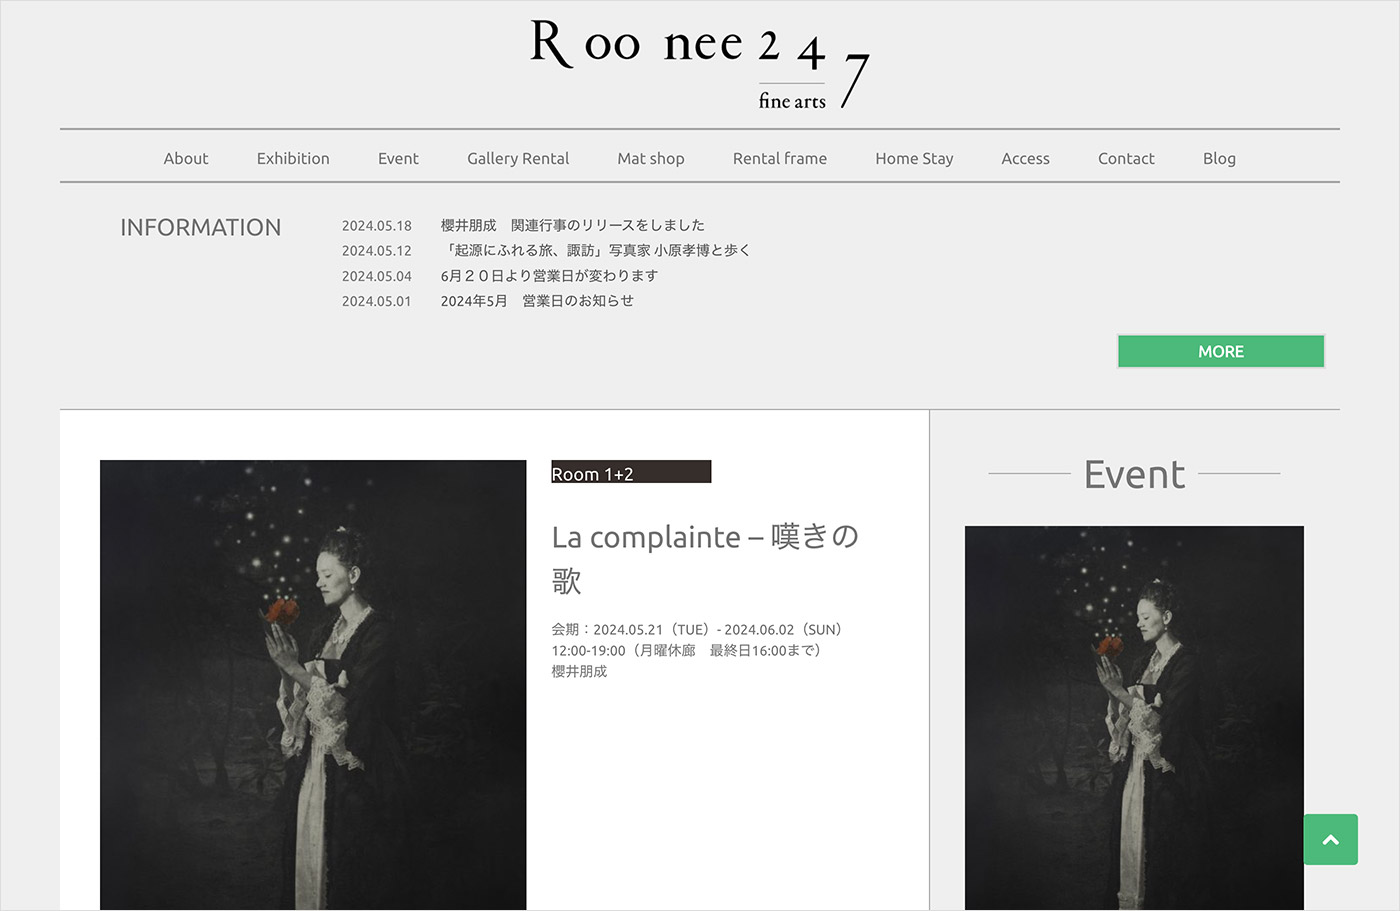 Roonee 247 Fine Artsウェブサイトの画面キャプチャ画像